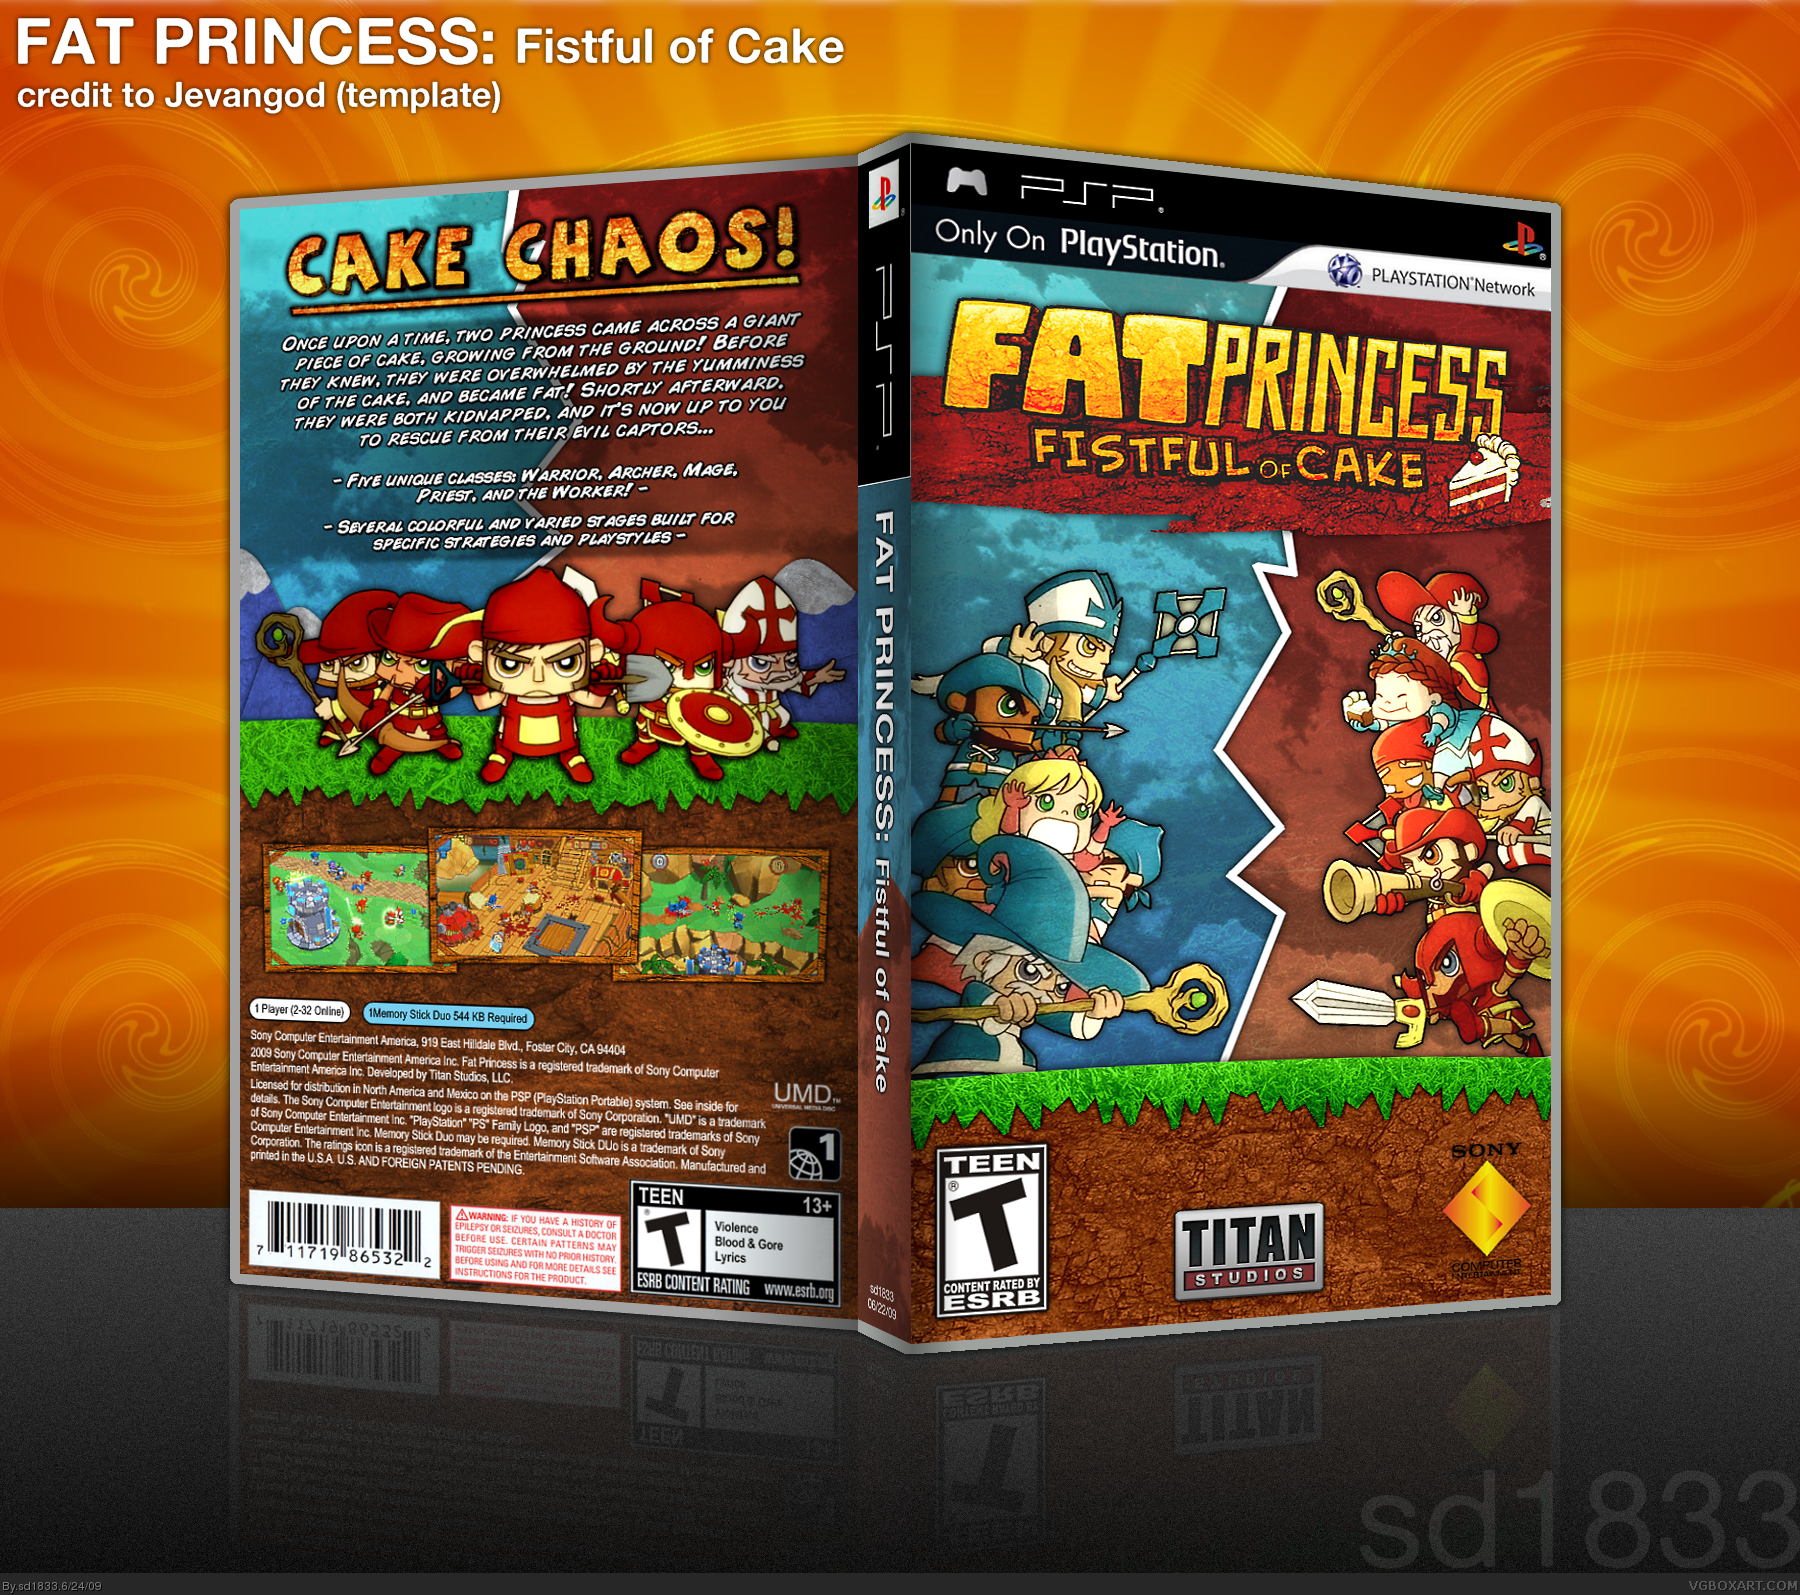 F a d games. Fat Princess Fistful of Cake PSP. Fat Princess Fistful of Cake PSP обложка. Принцесса Обжора на PSP. Fat Princess: Fistful of Cake PSP Cover.